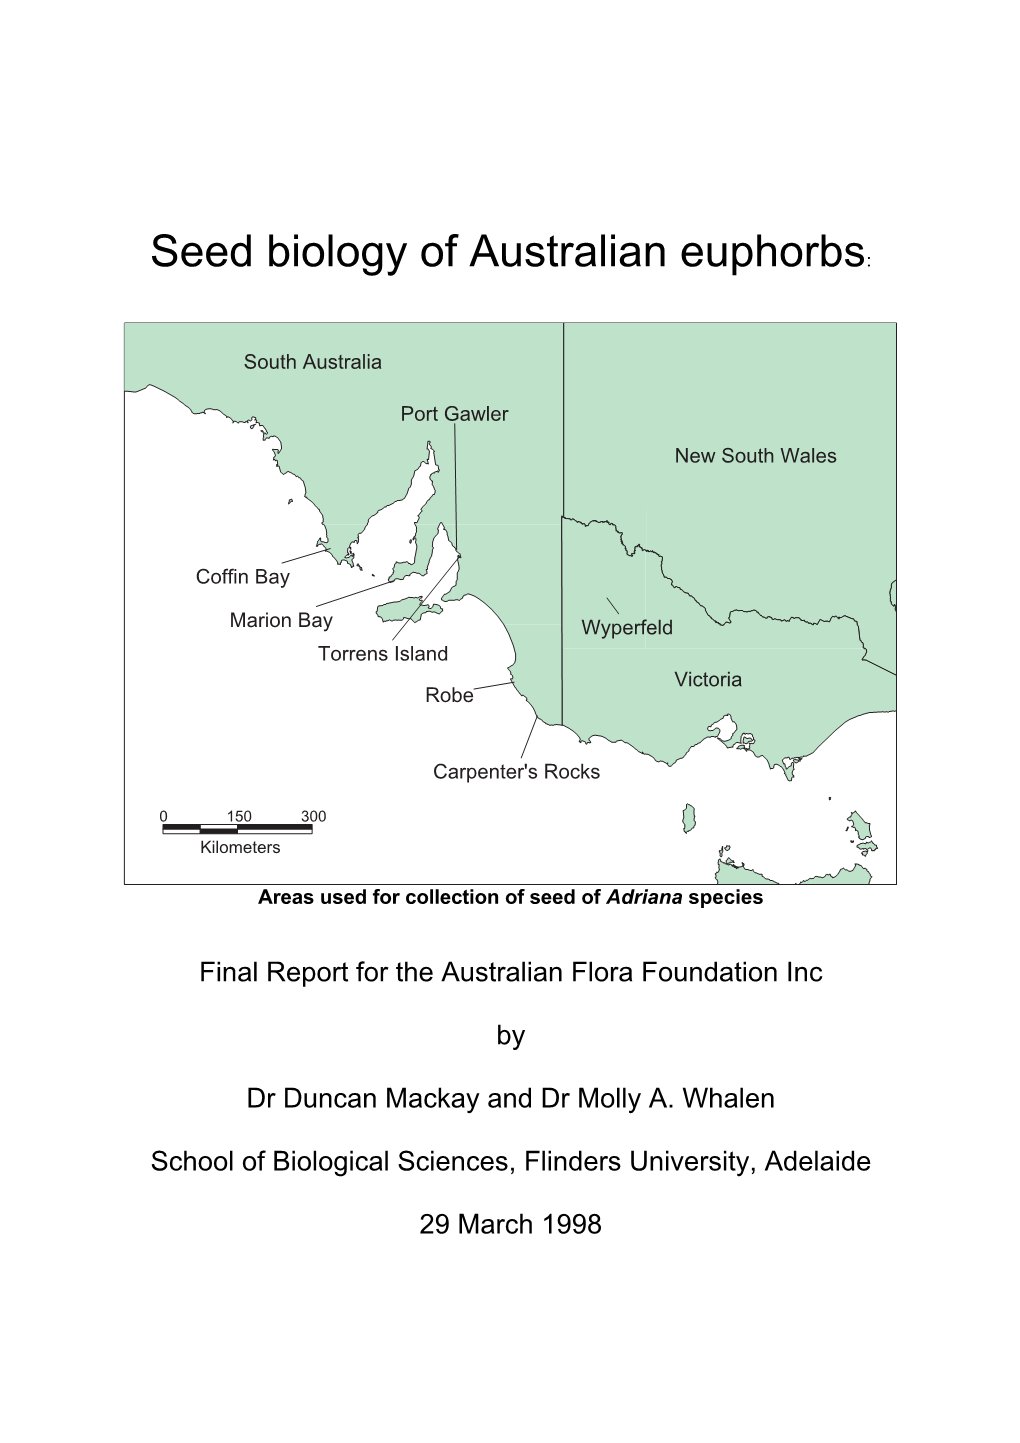 Final Report for the Australian Flora Foundation Inc